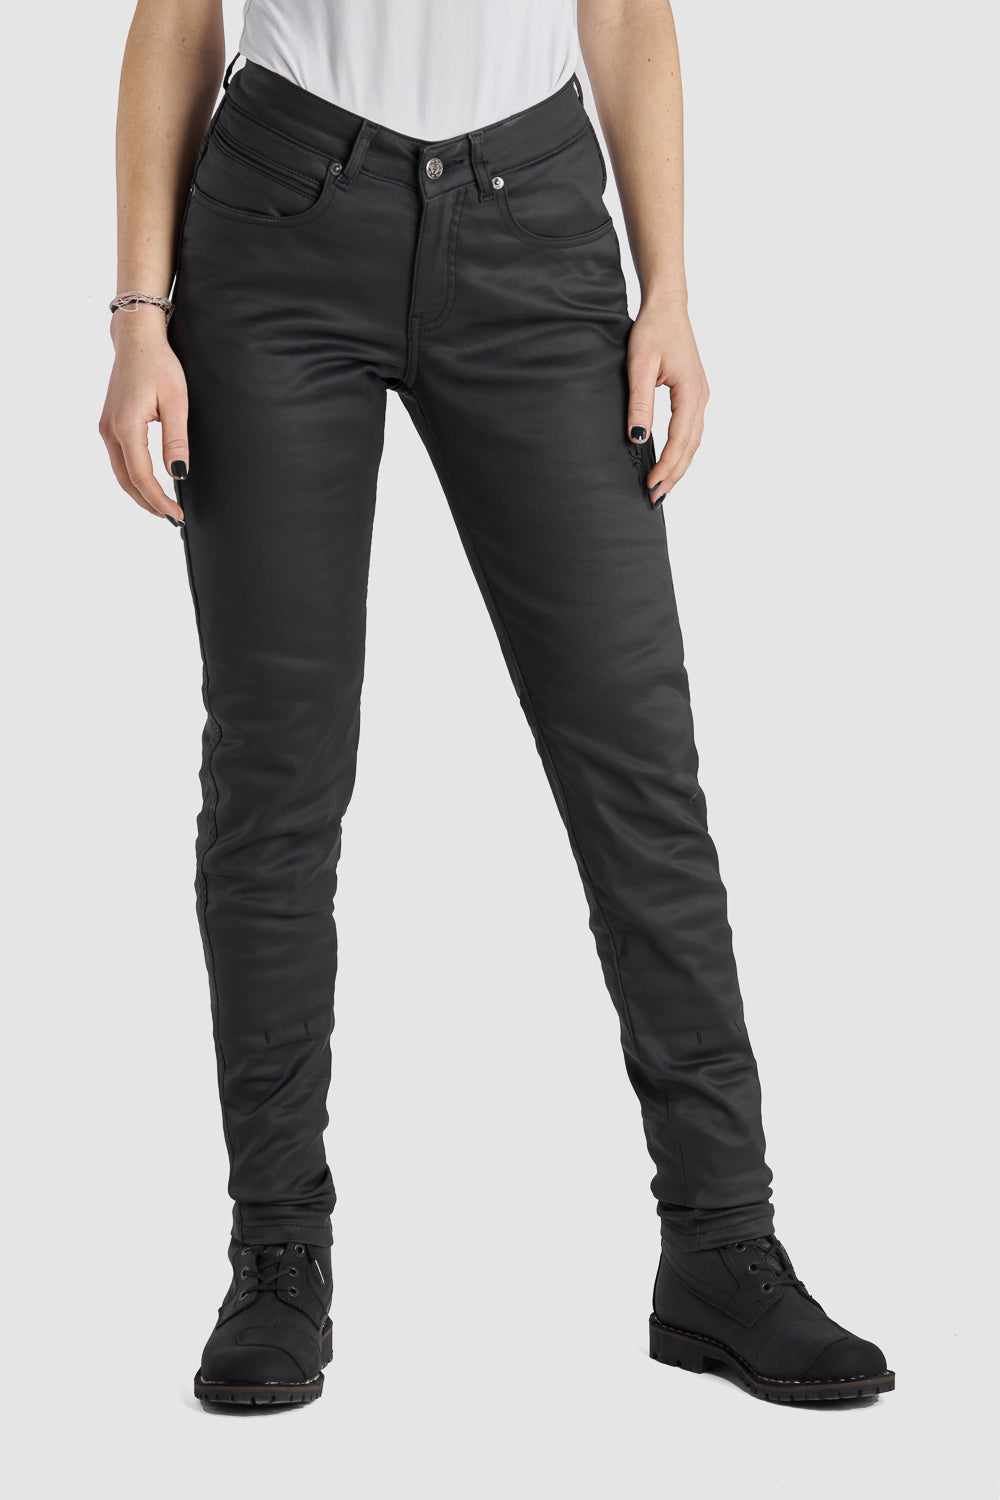 Woman wearing women&#39;s black motorcycle jeans Lorica Kevlar from Pando Moto